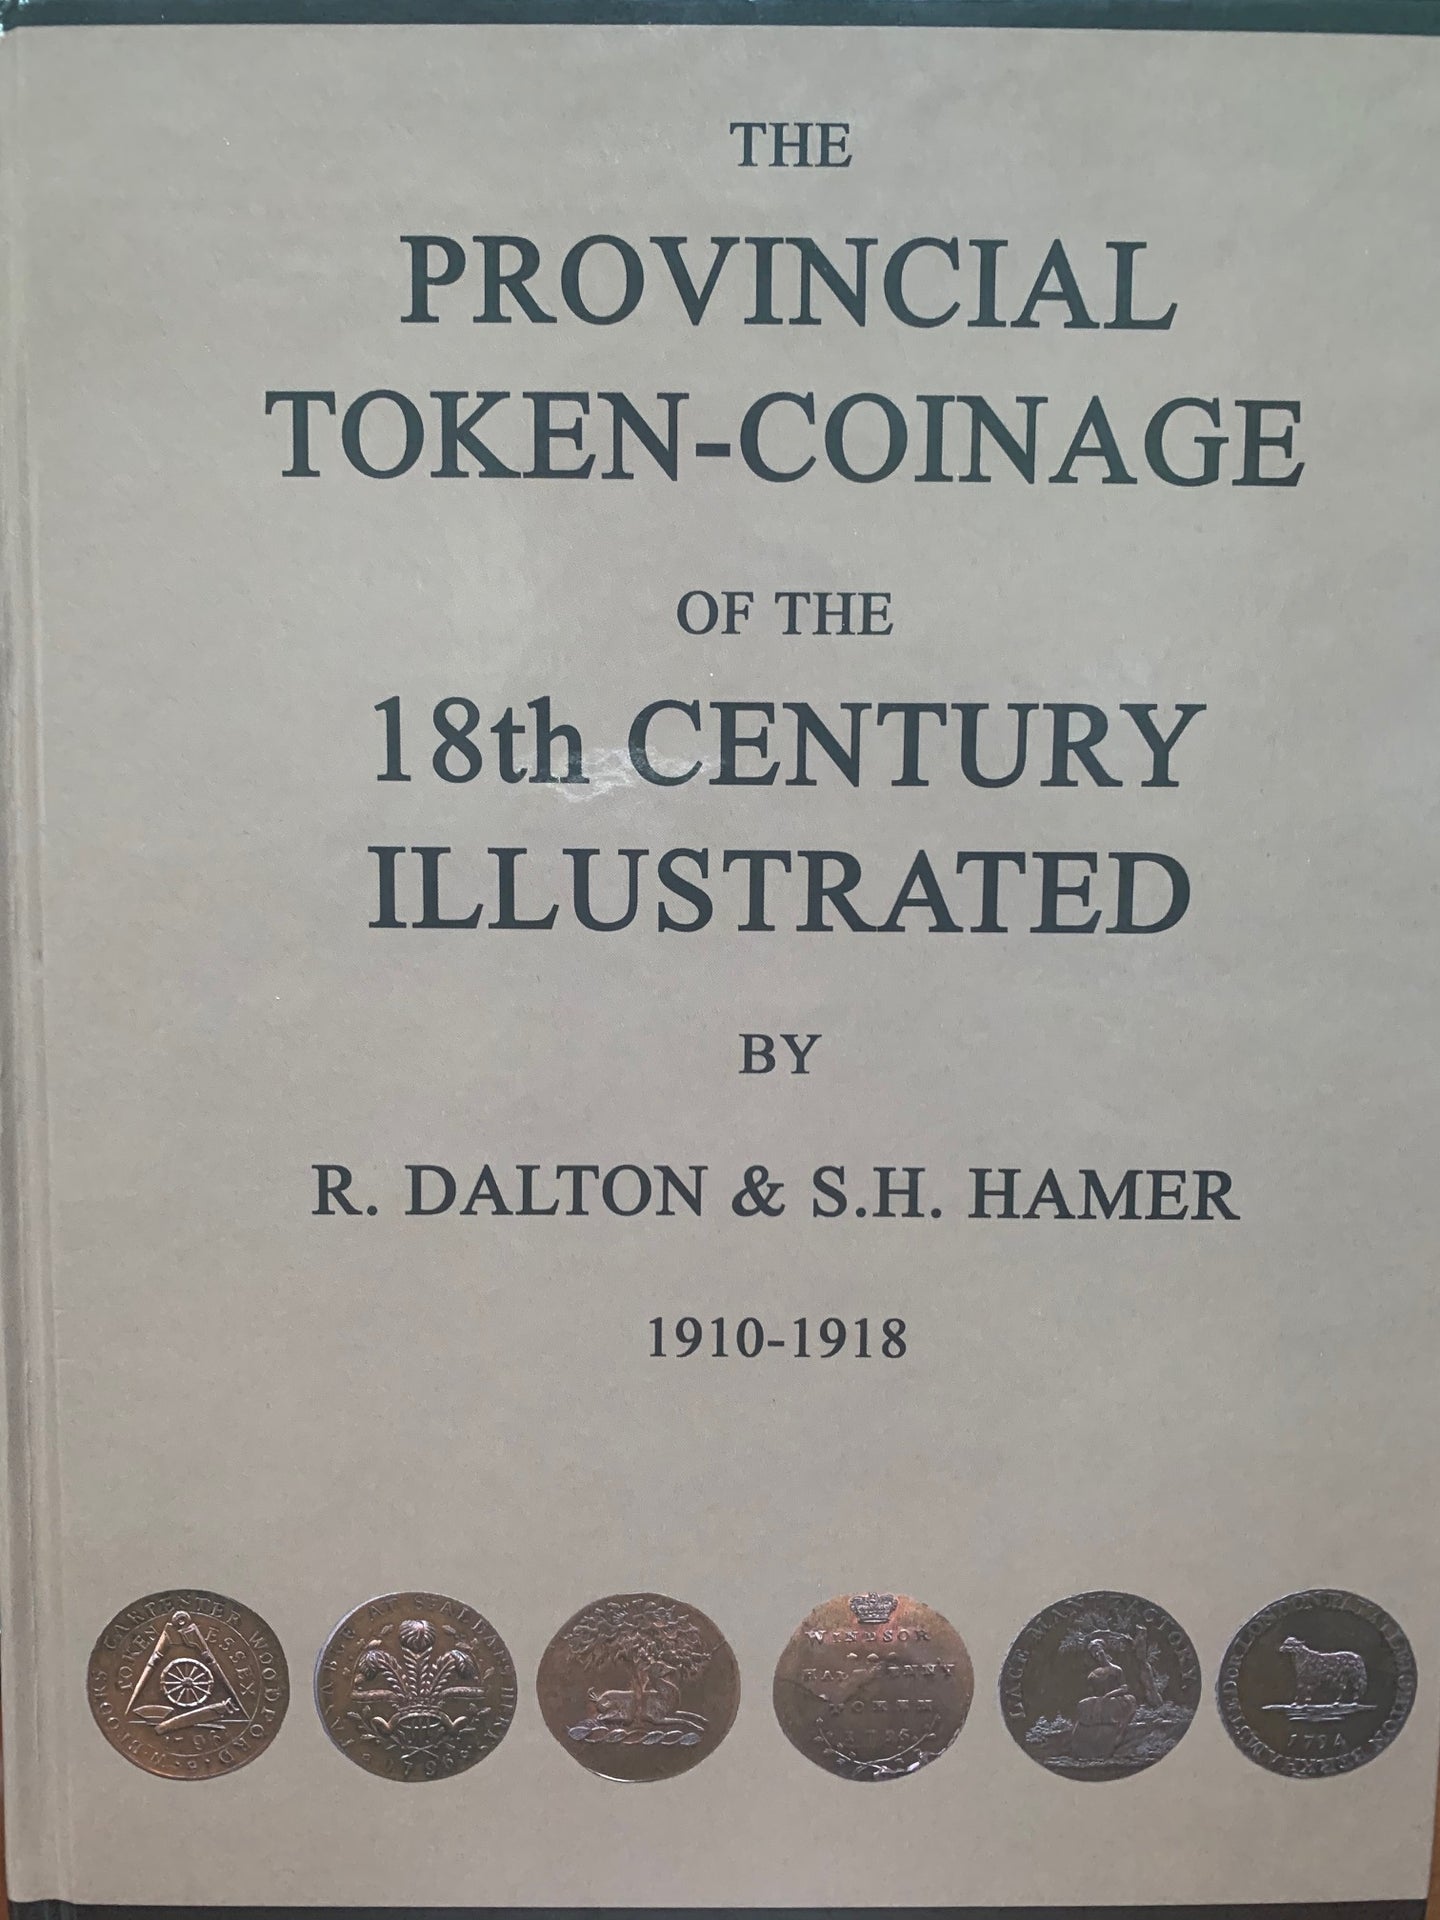 Dalton & Hamer Guide to 18th Century Provincial Tokens